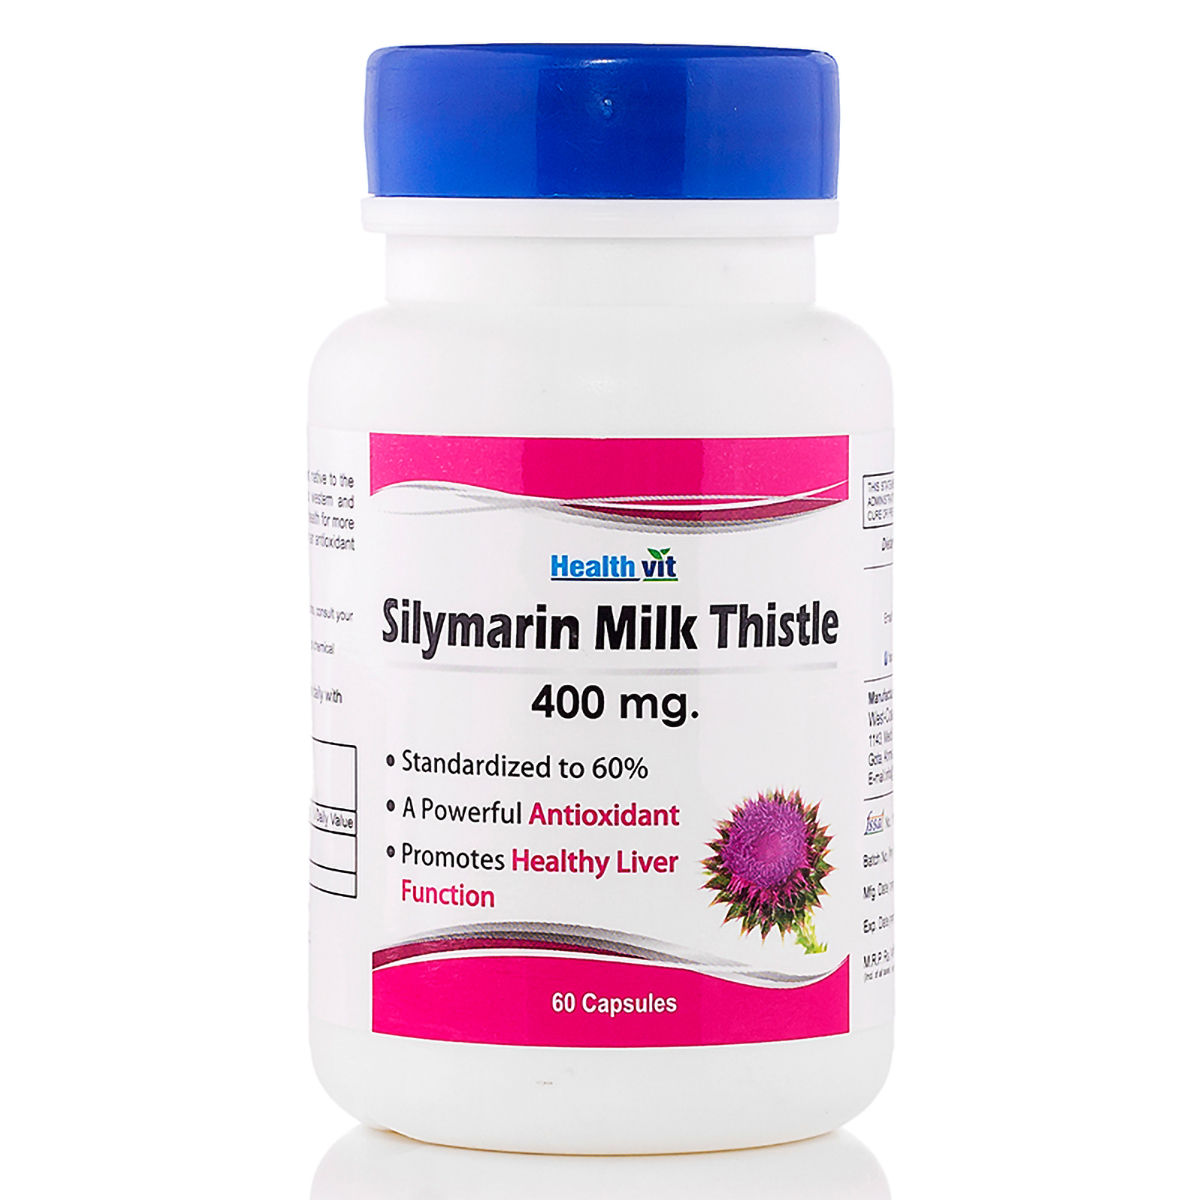 Buy Healthvit Silymarin Milk Thistle 400 mg, 60 Capsules Online